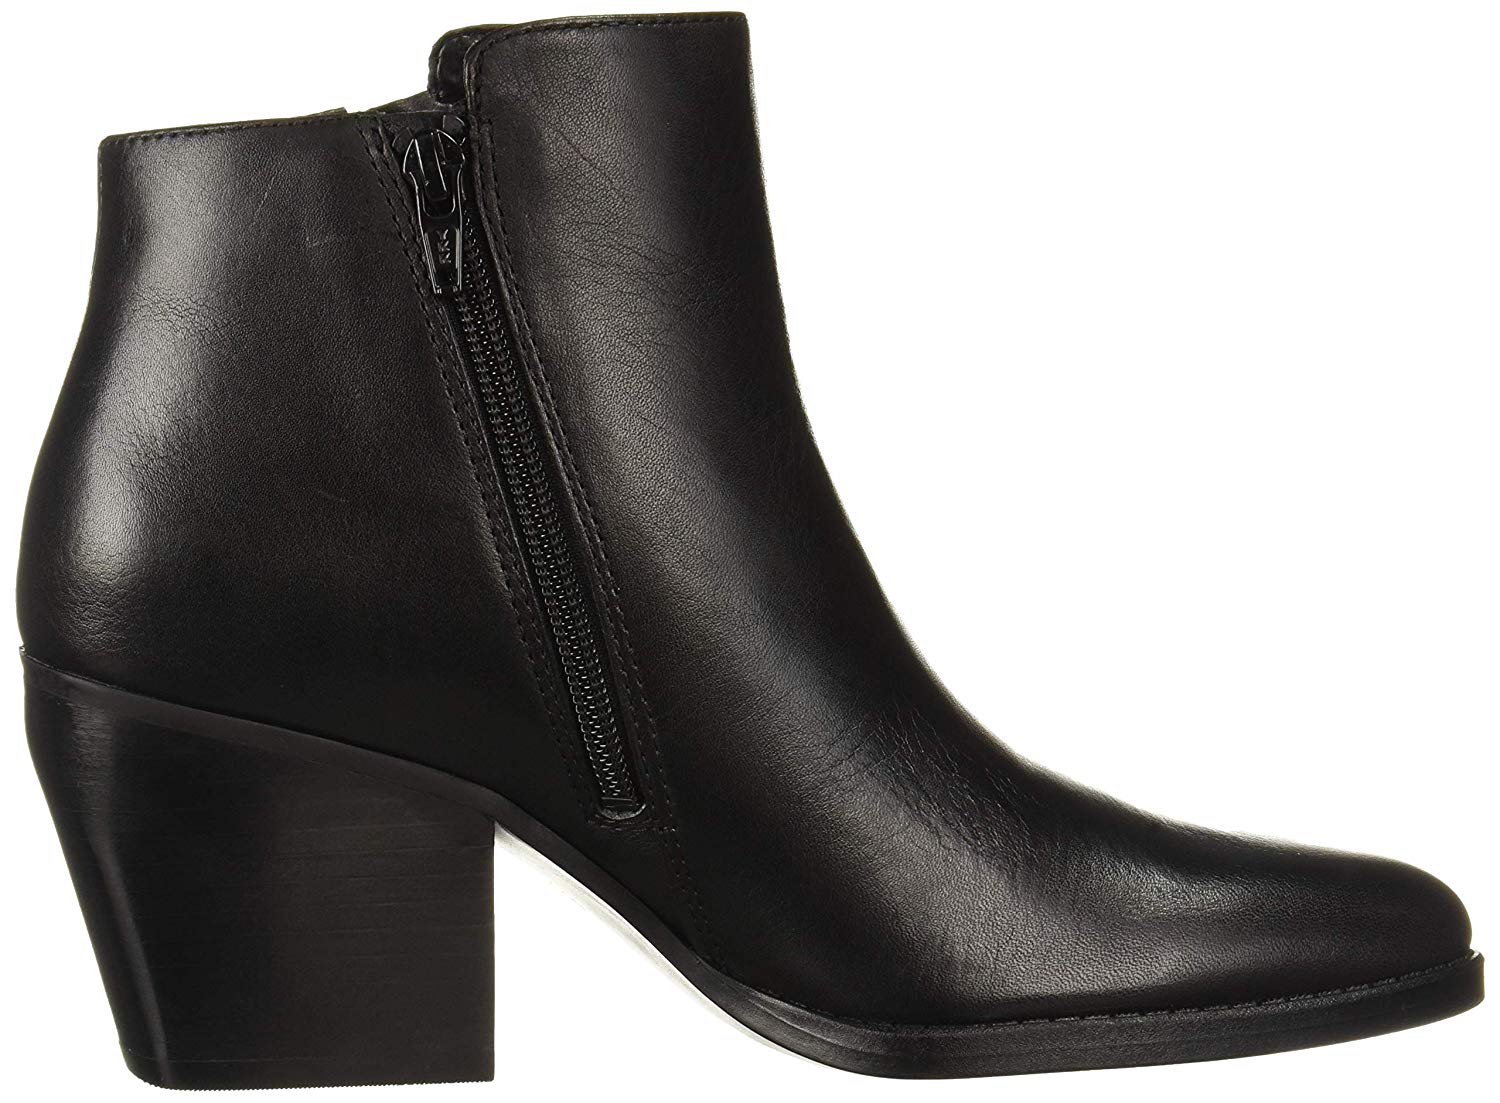 Naturalizer Women's Freya Ankle Boot, Black Leather, Size 6.0 odjG